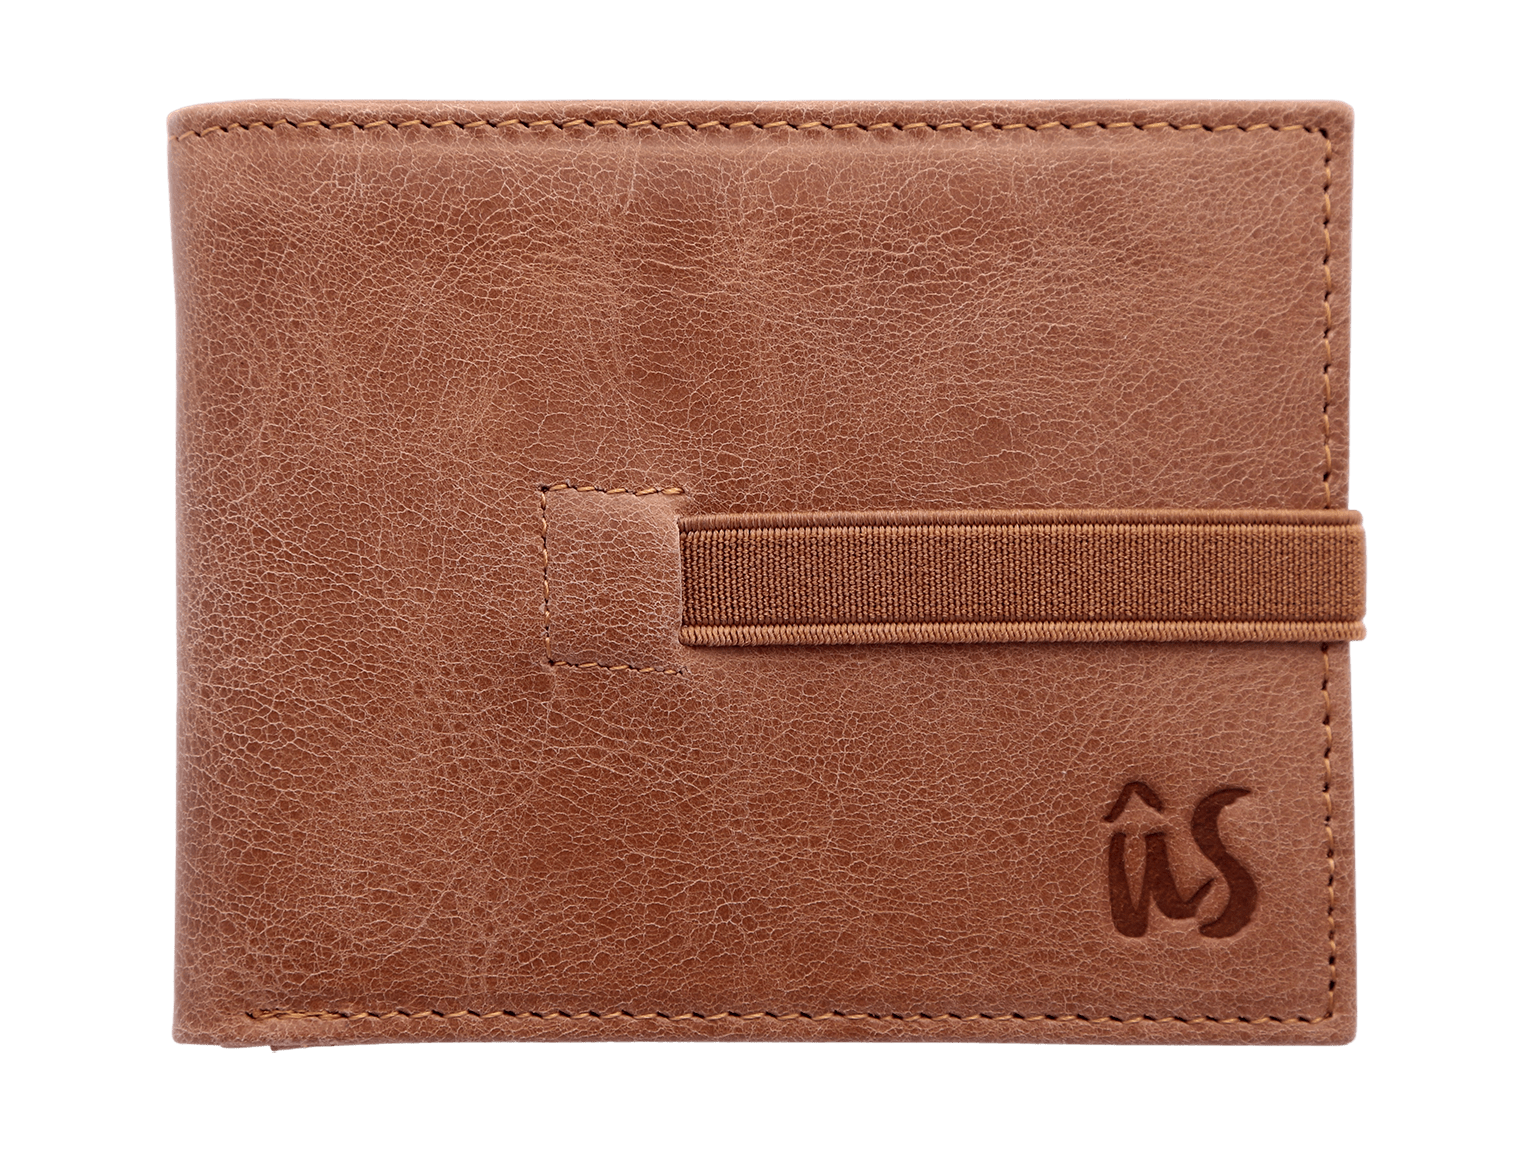 The Maxy Strap Wallet in Savannah Brown #savannah-brown